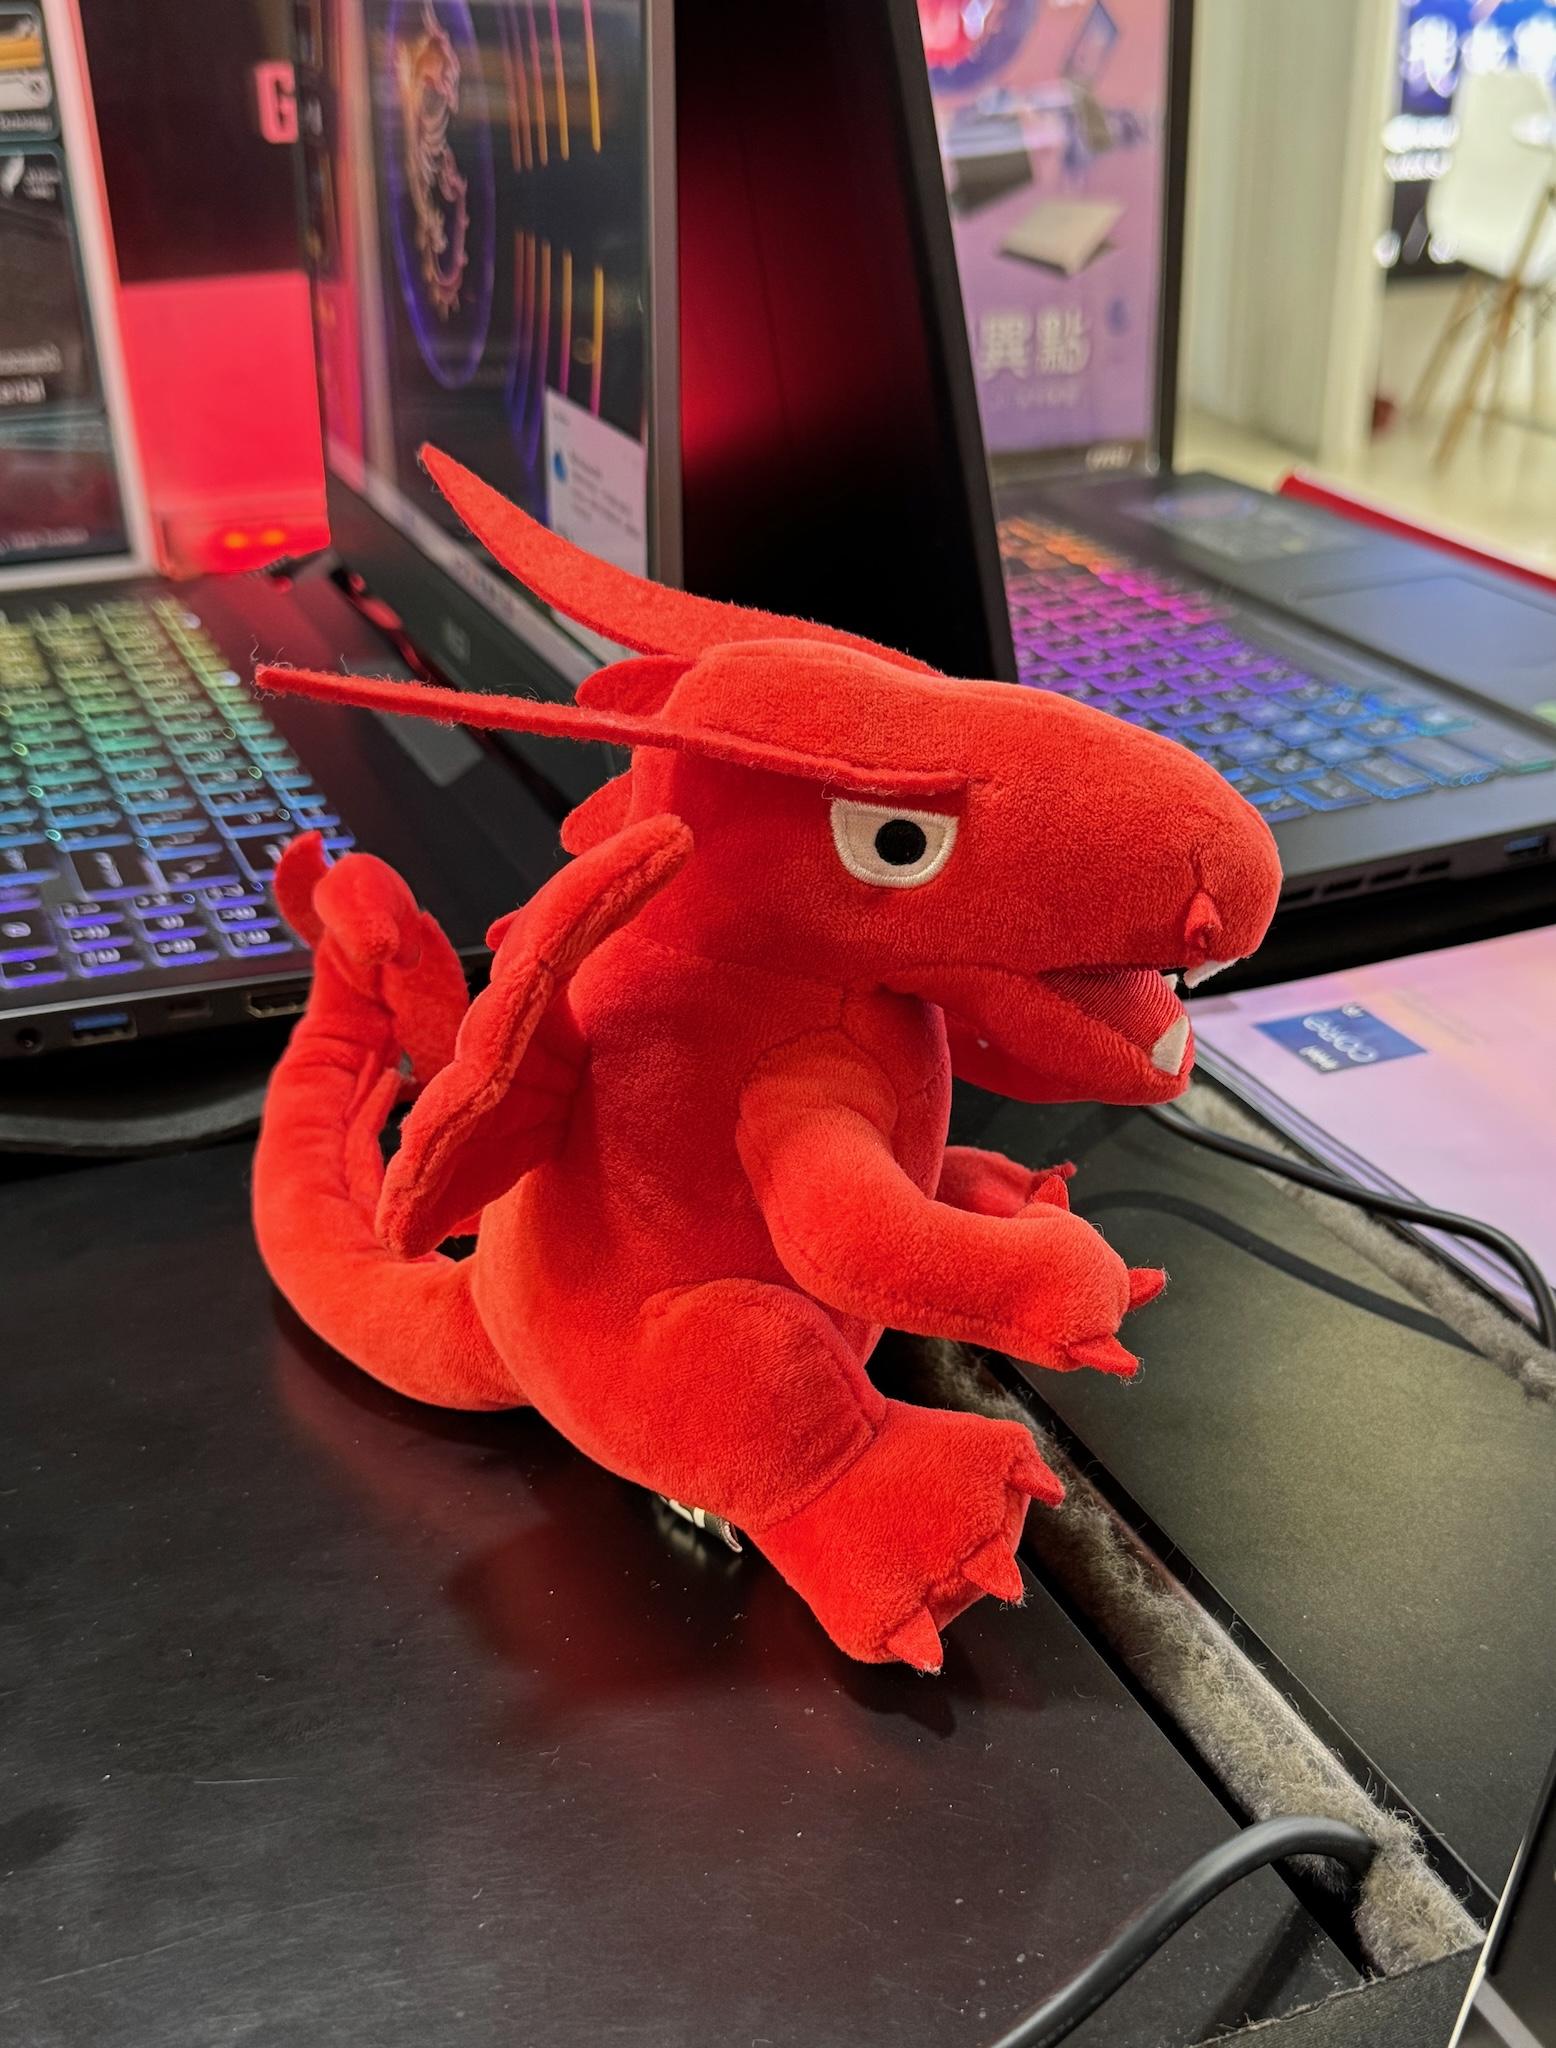 A laptop manufacturer's dragon mascot plush